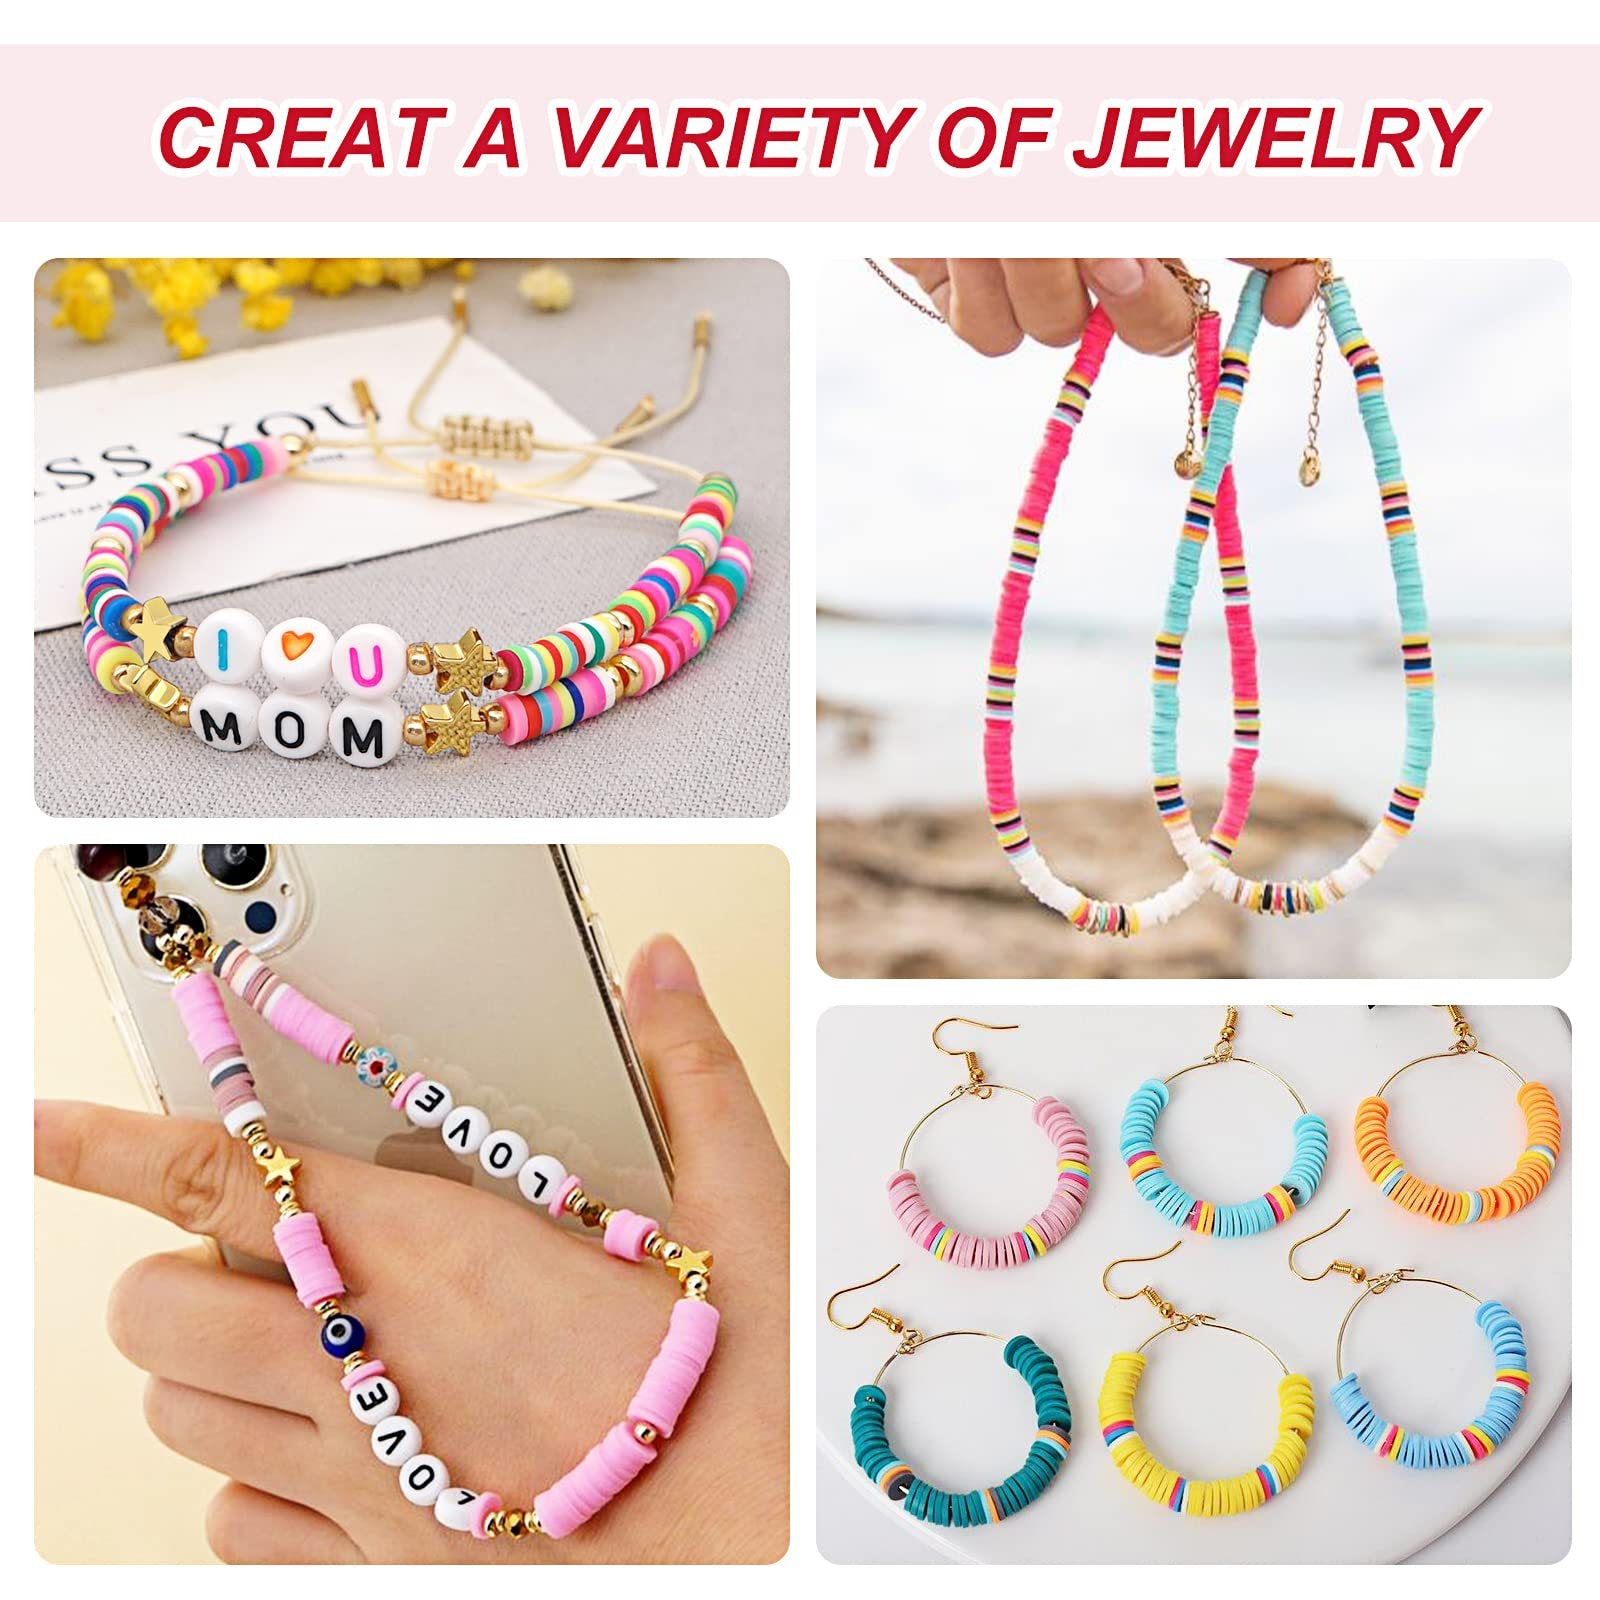 6MM Polymer Clay Beads Set Bracelet Making Kit